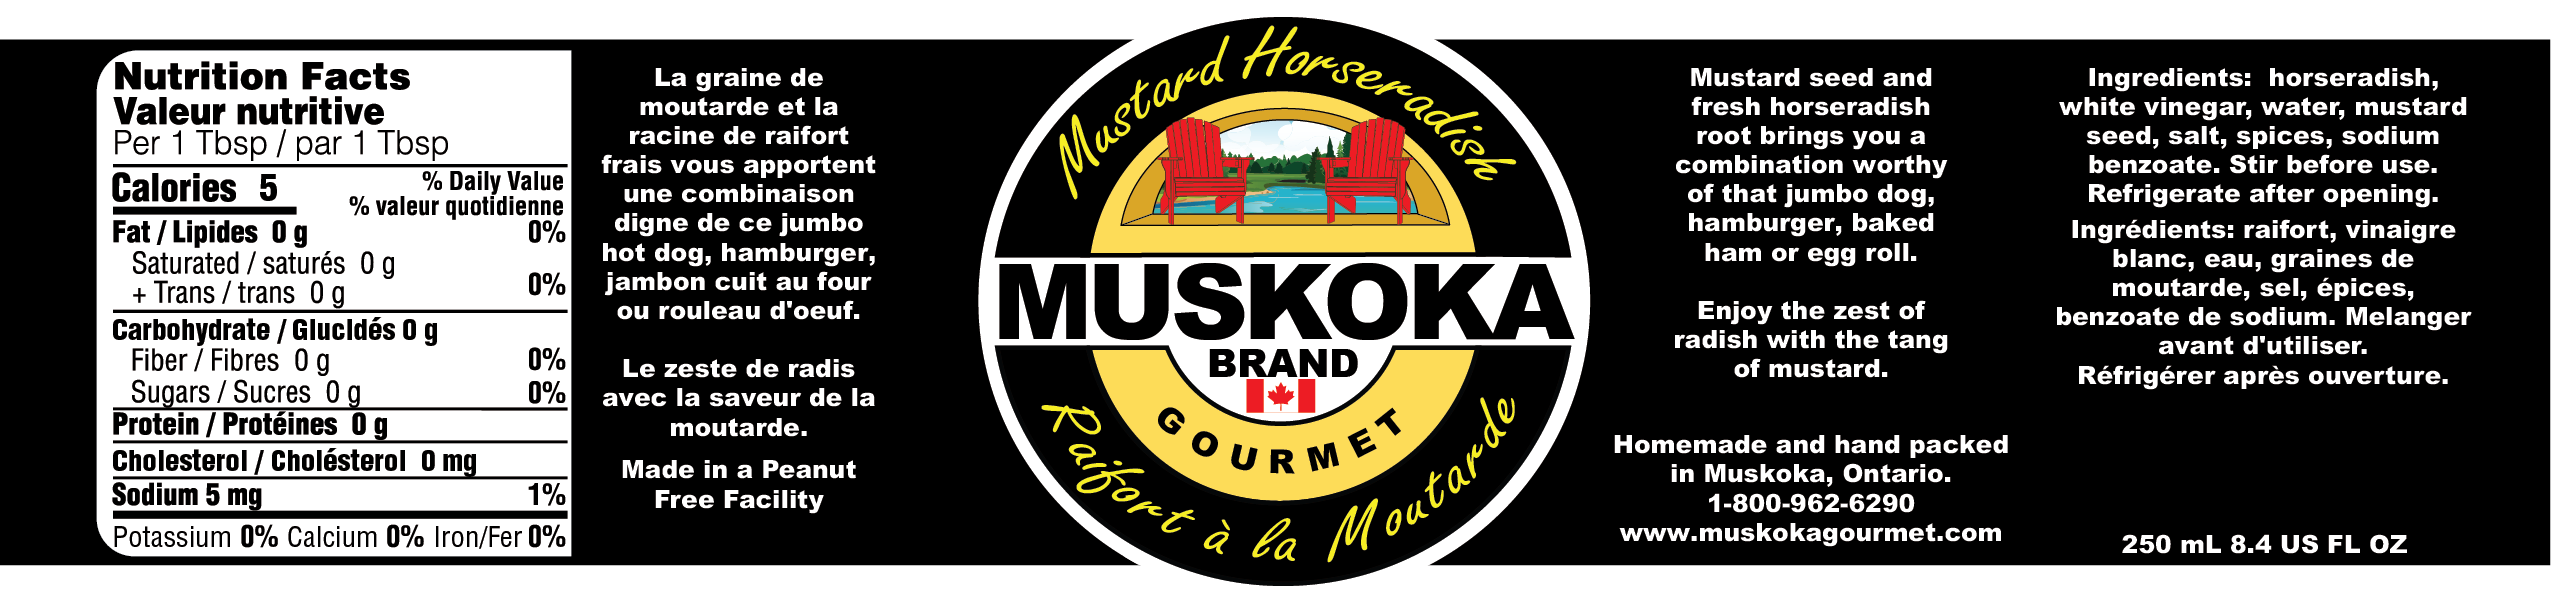 Muskoka horseradish mustard nutritional and information.